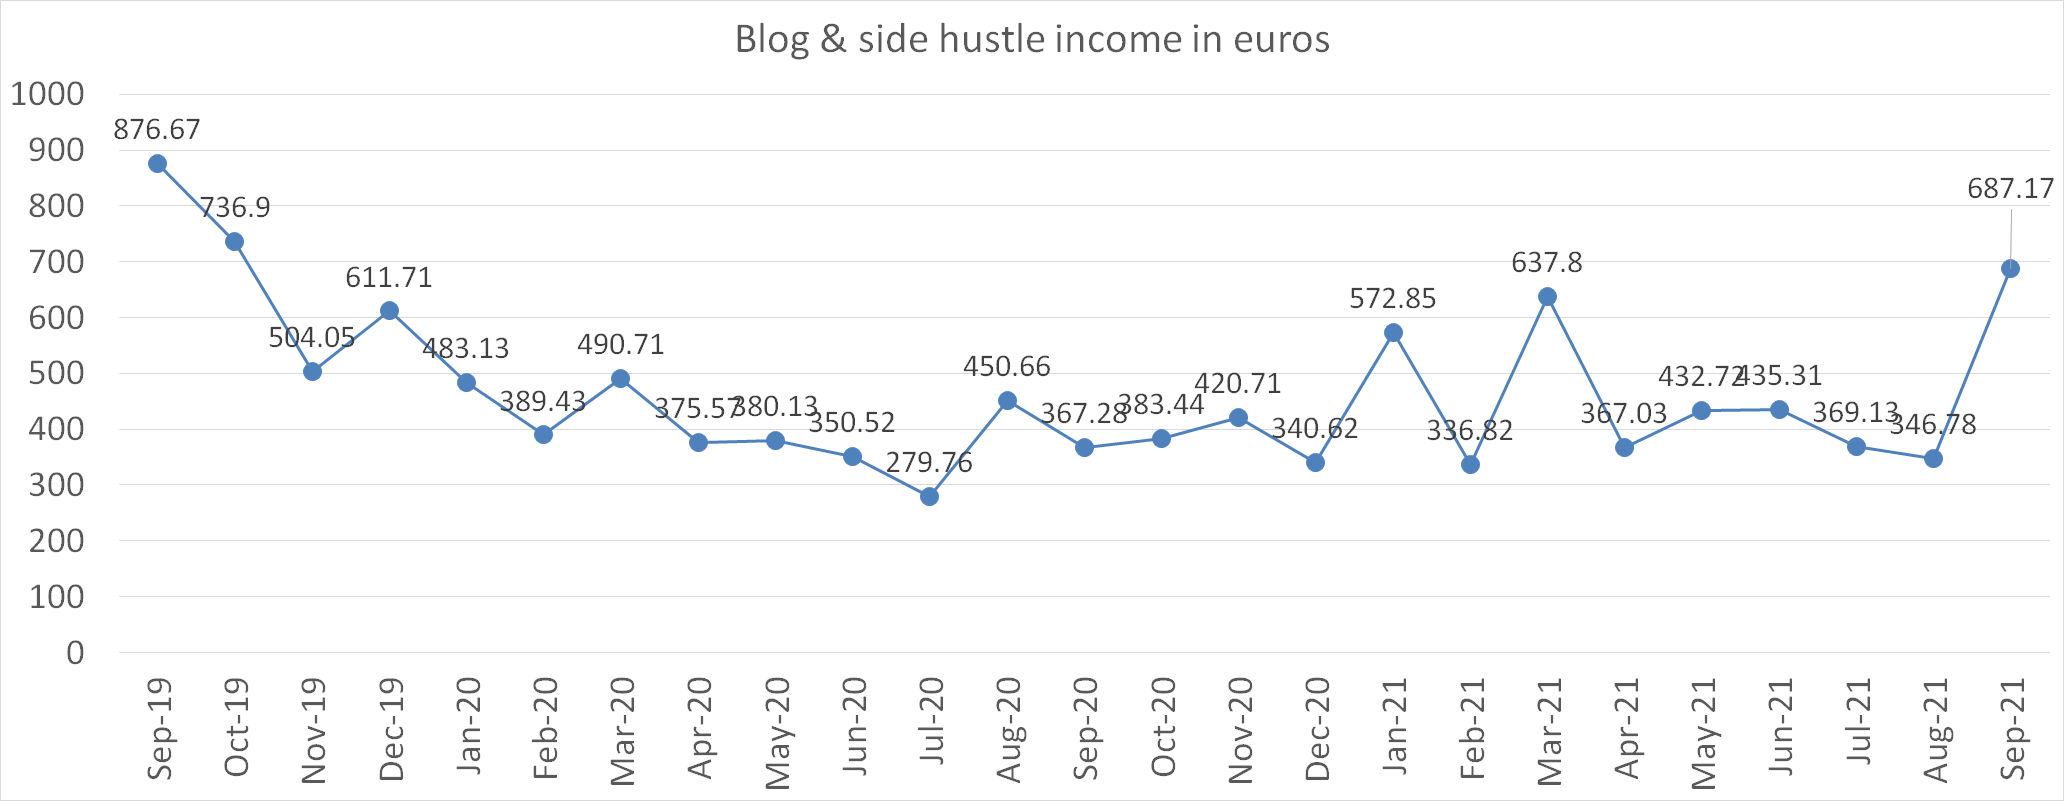 Blog and side hustle income in euros september 2021